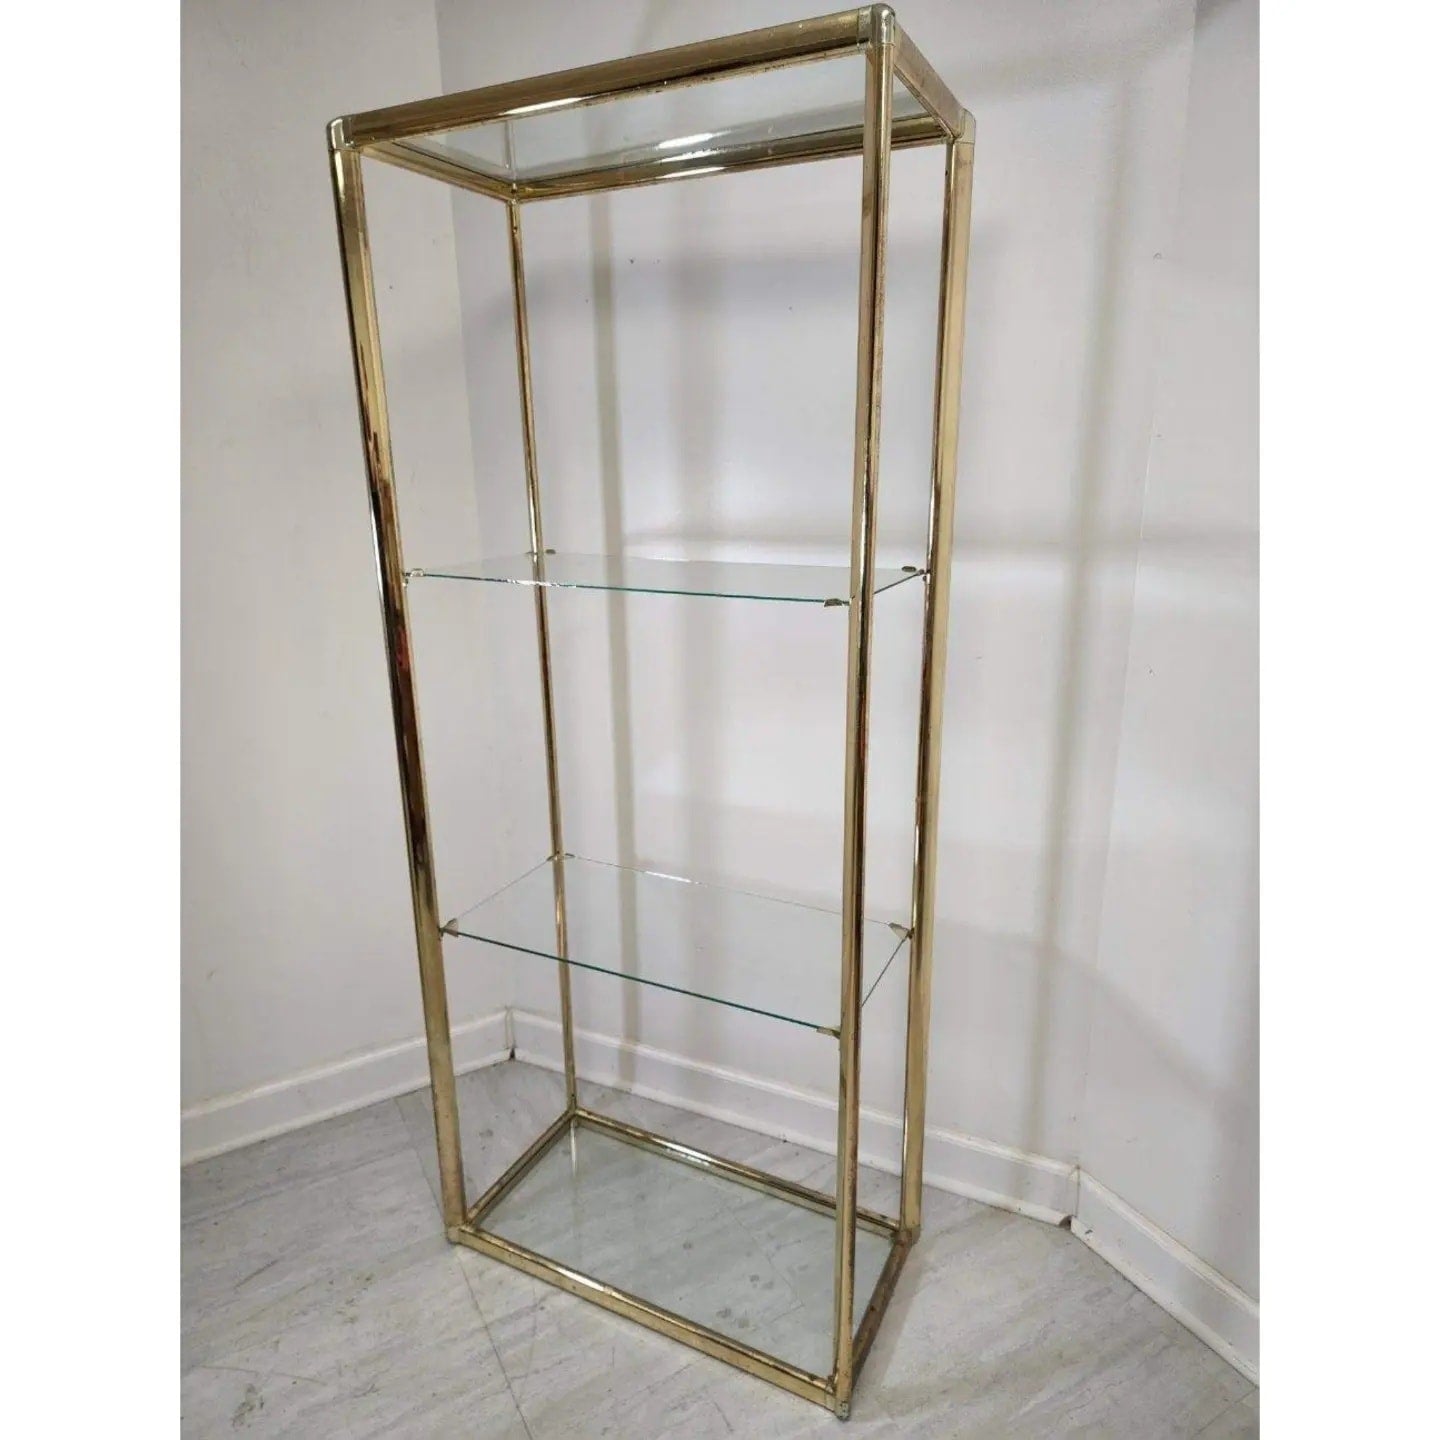 Vintage Brass & Glass Etagere Display Shelving Unit